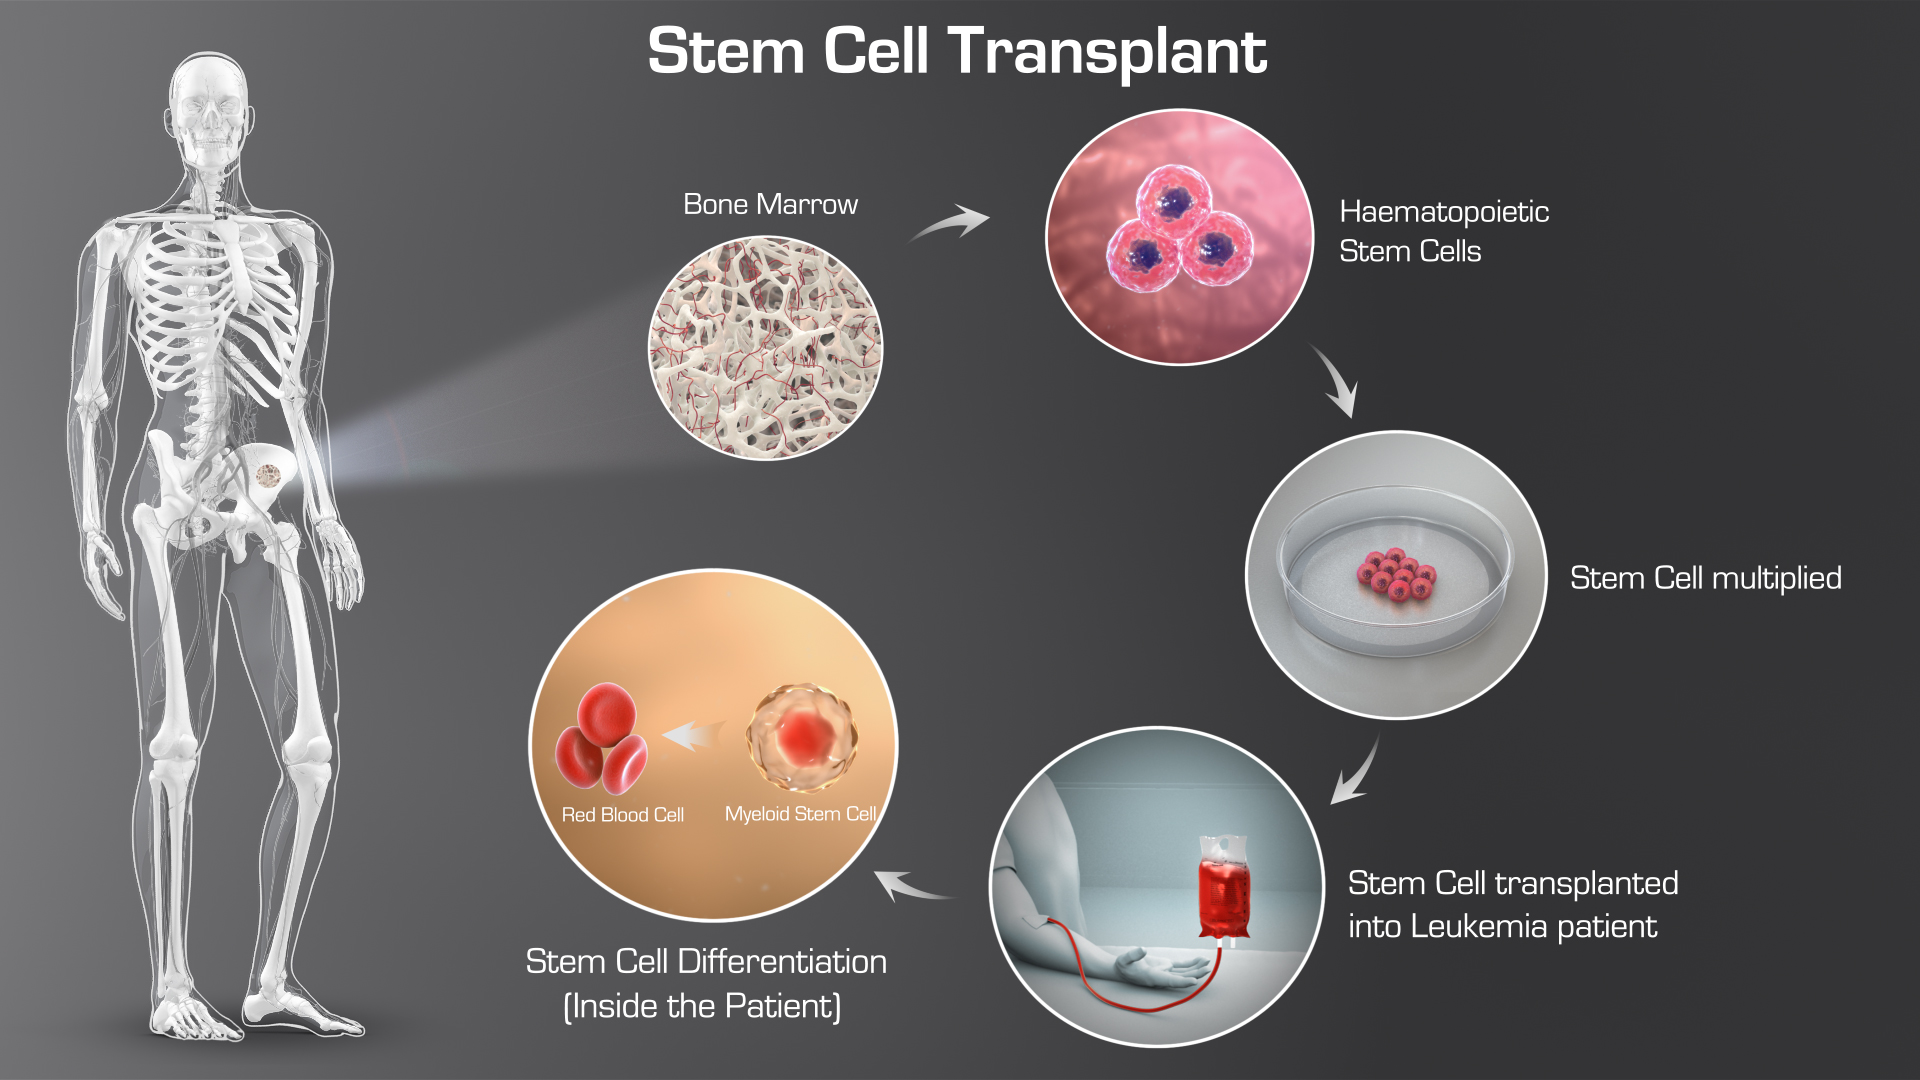 StemCellTransplant - IOW47 - Scientific Animations